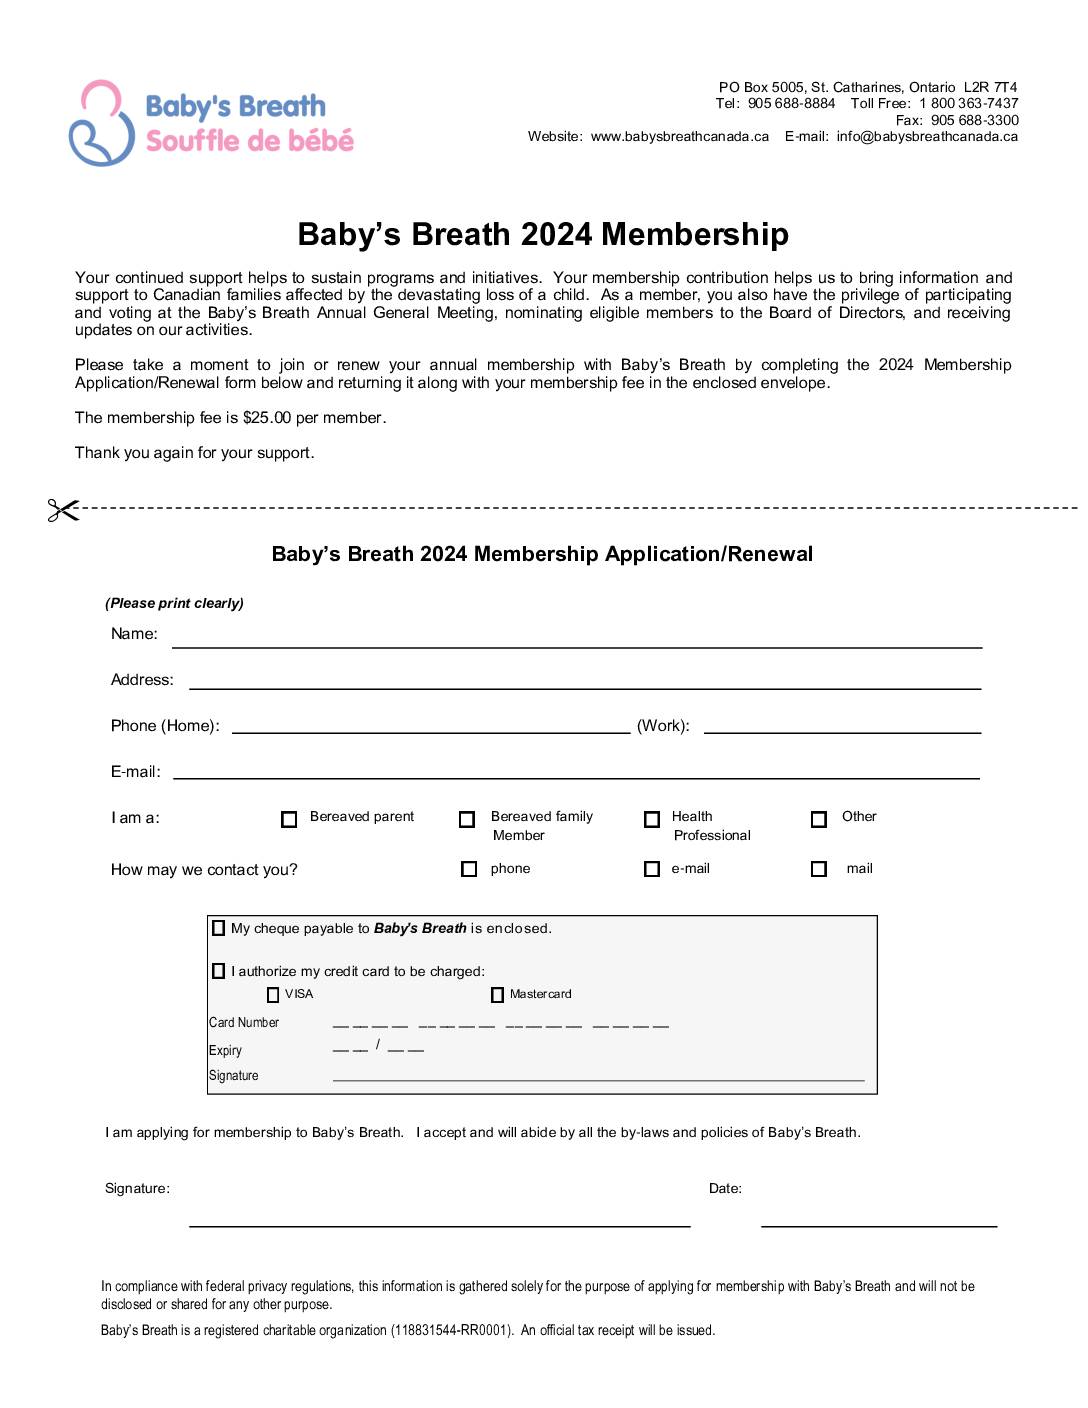 Baby’s Breath Membership Form 2024